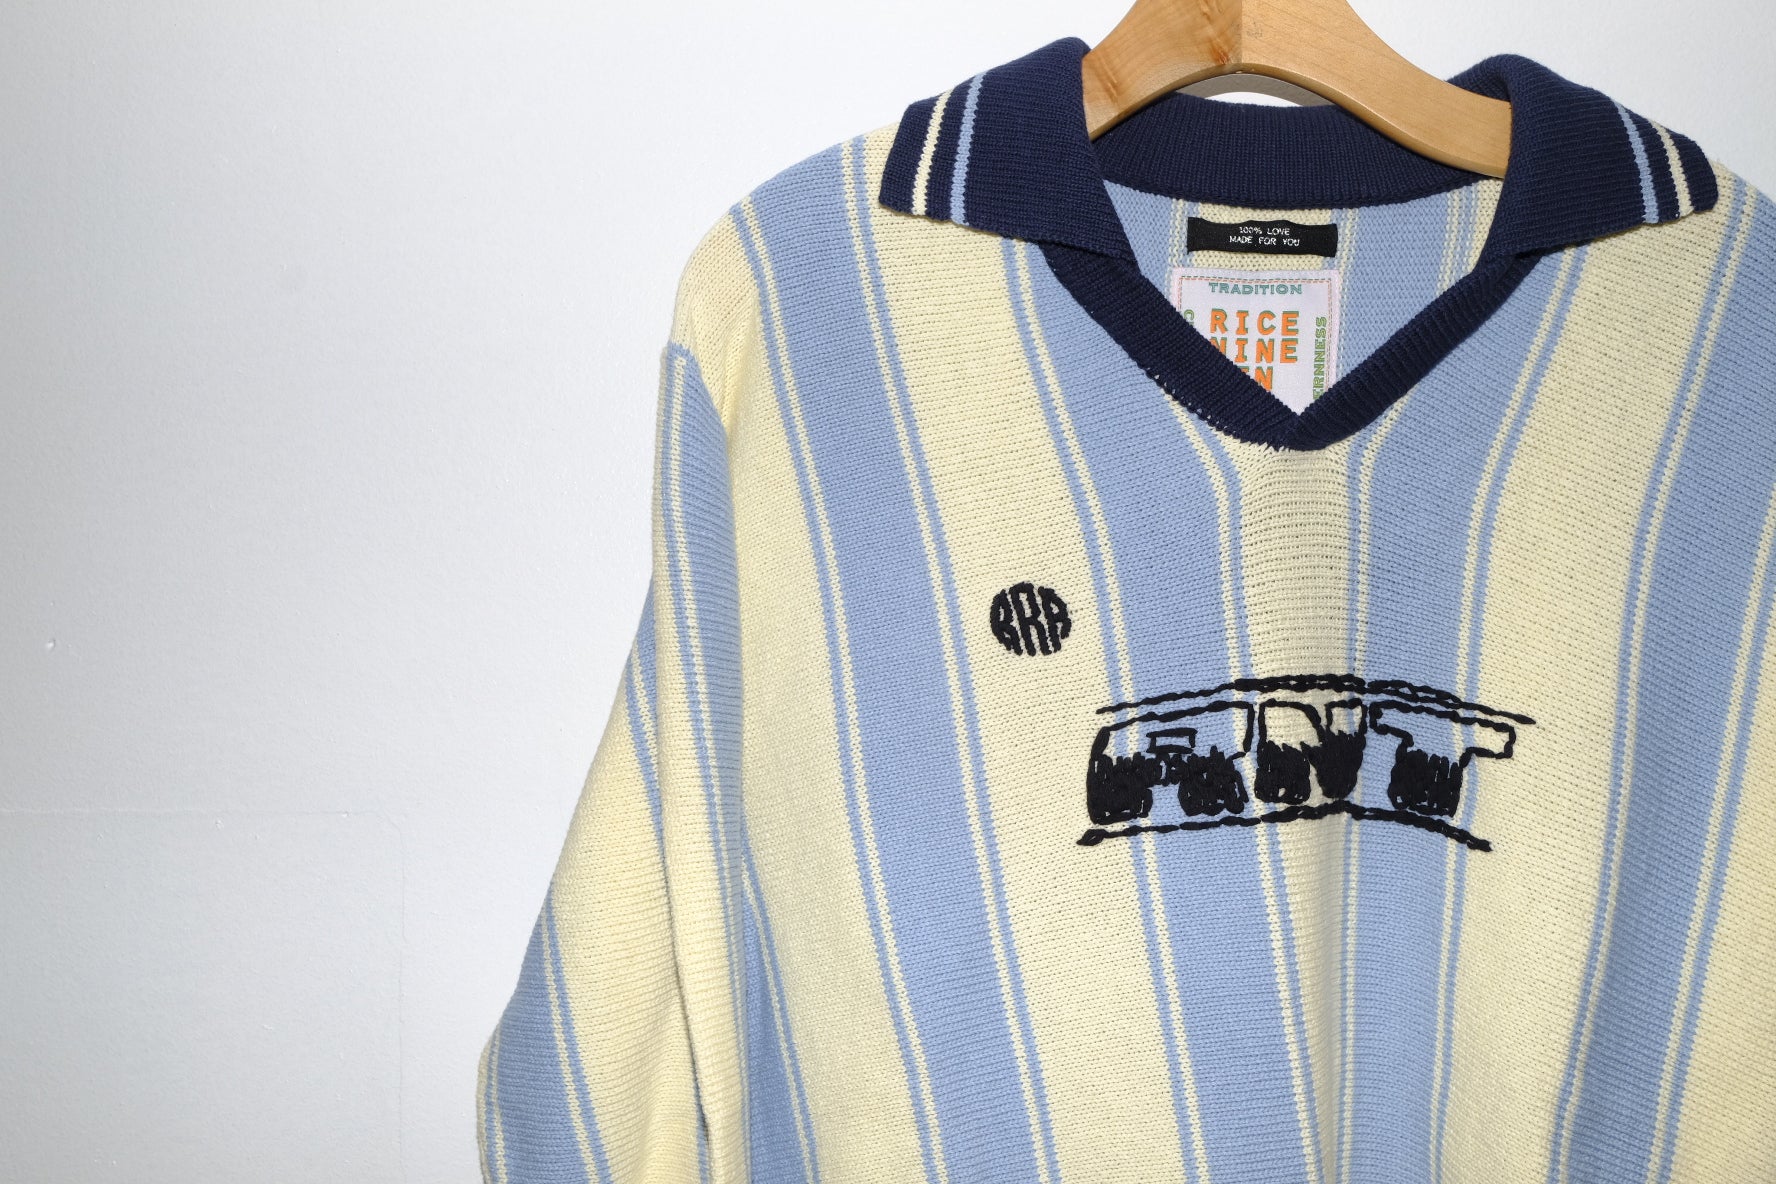 knitting long sleeve soccer jersey in light blue